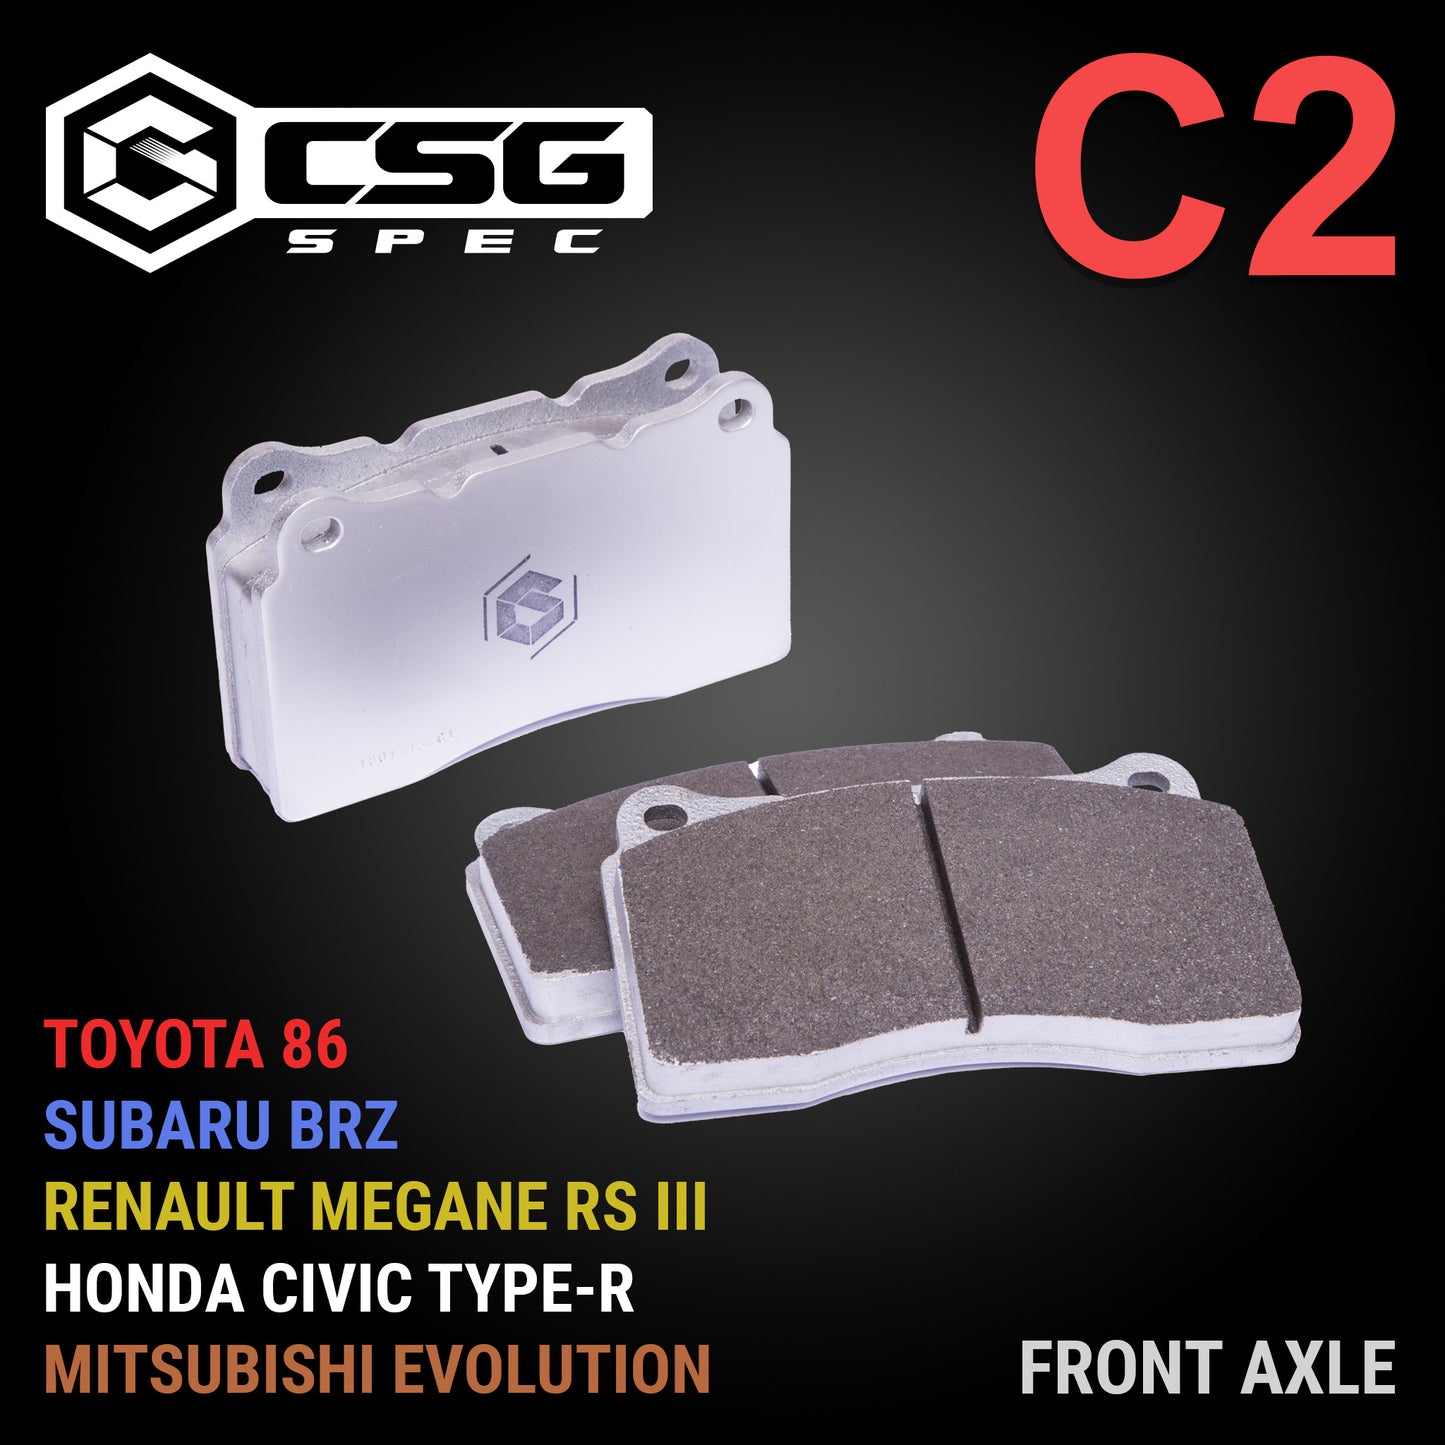 CSG Spec C2 Front Brake Pads for Toyota 86 / Subaru BRZ (Brembo brakes), Civic Type-R, Megane RS III, Mitsubishi Evolution